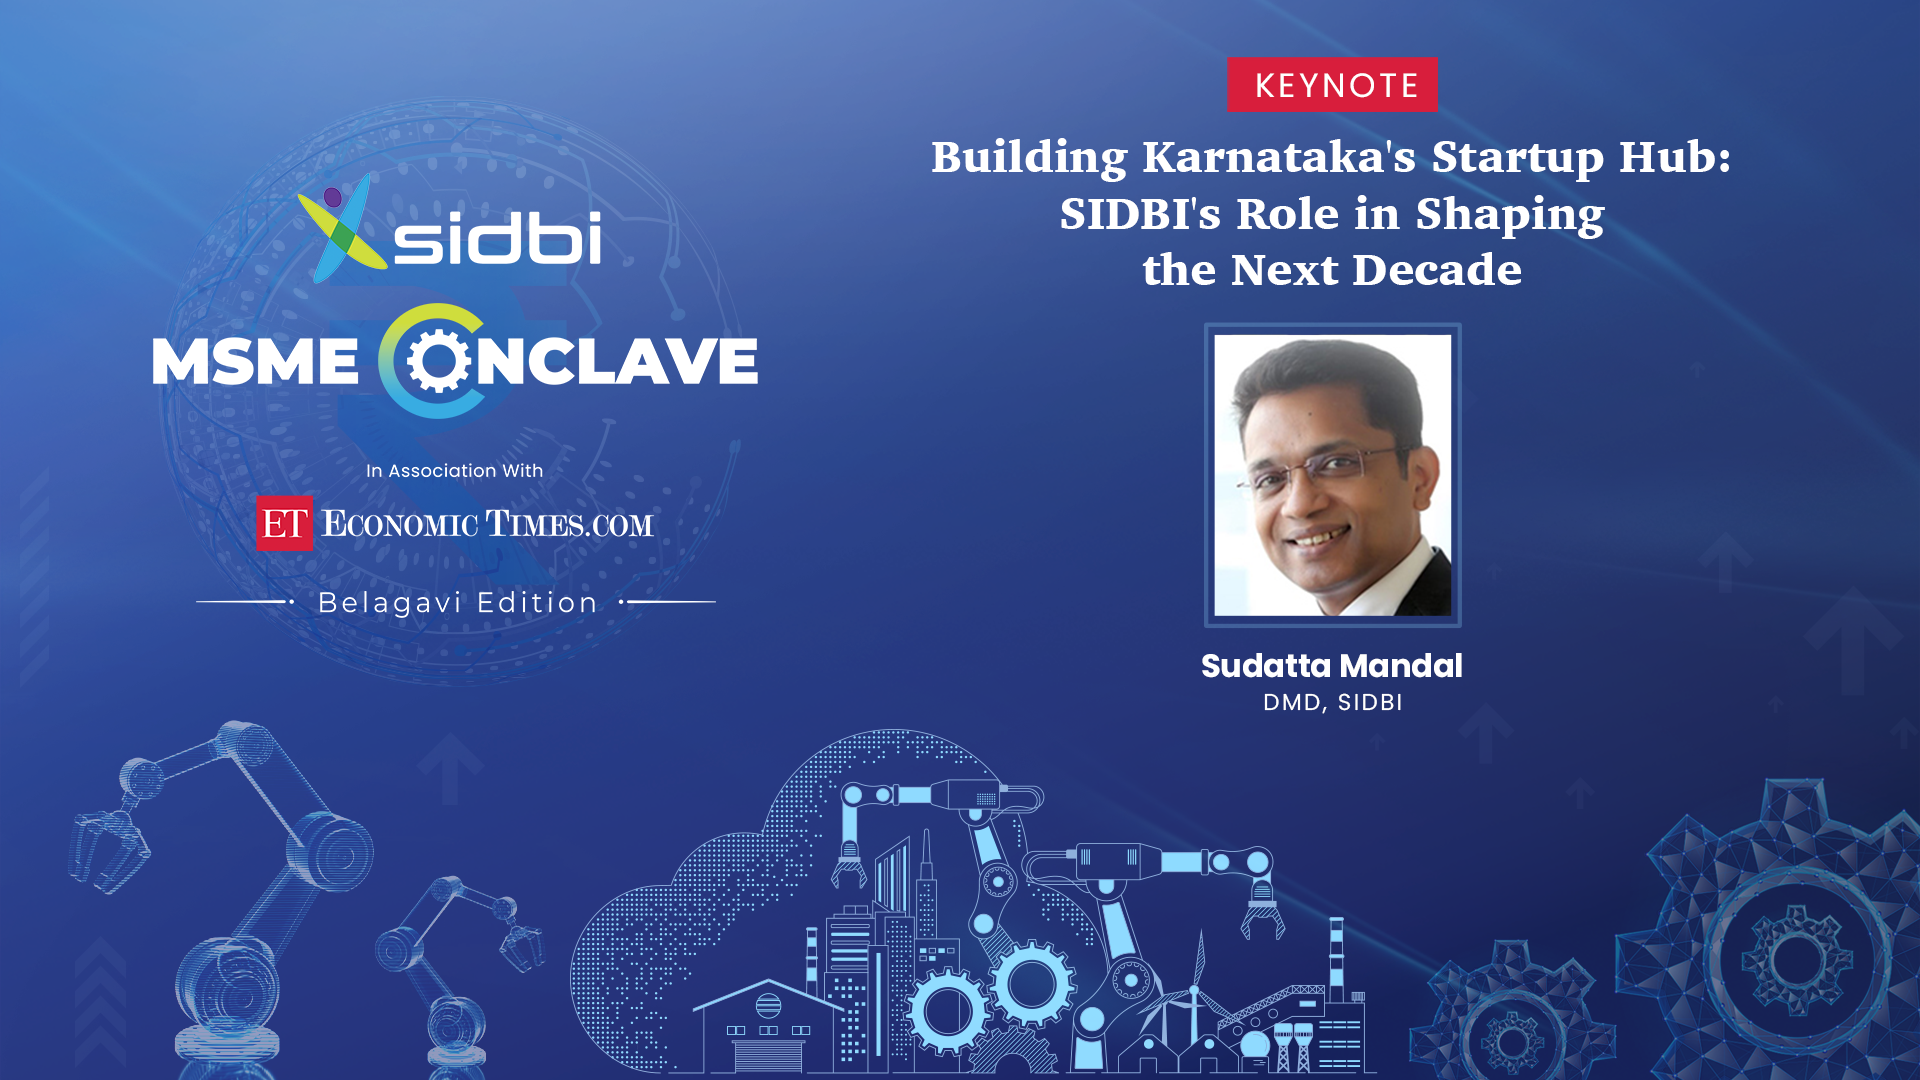 SIDBI MSME Conclave: Powering Karnataka's Startup Hub for the Next Decade